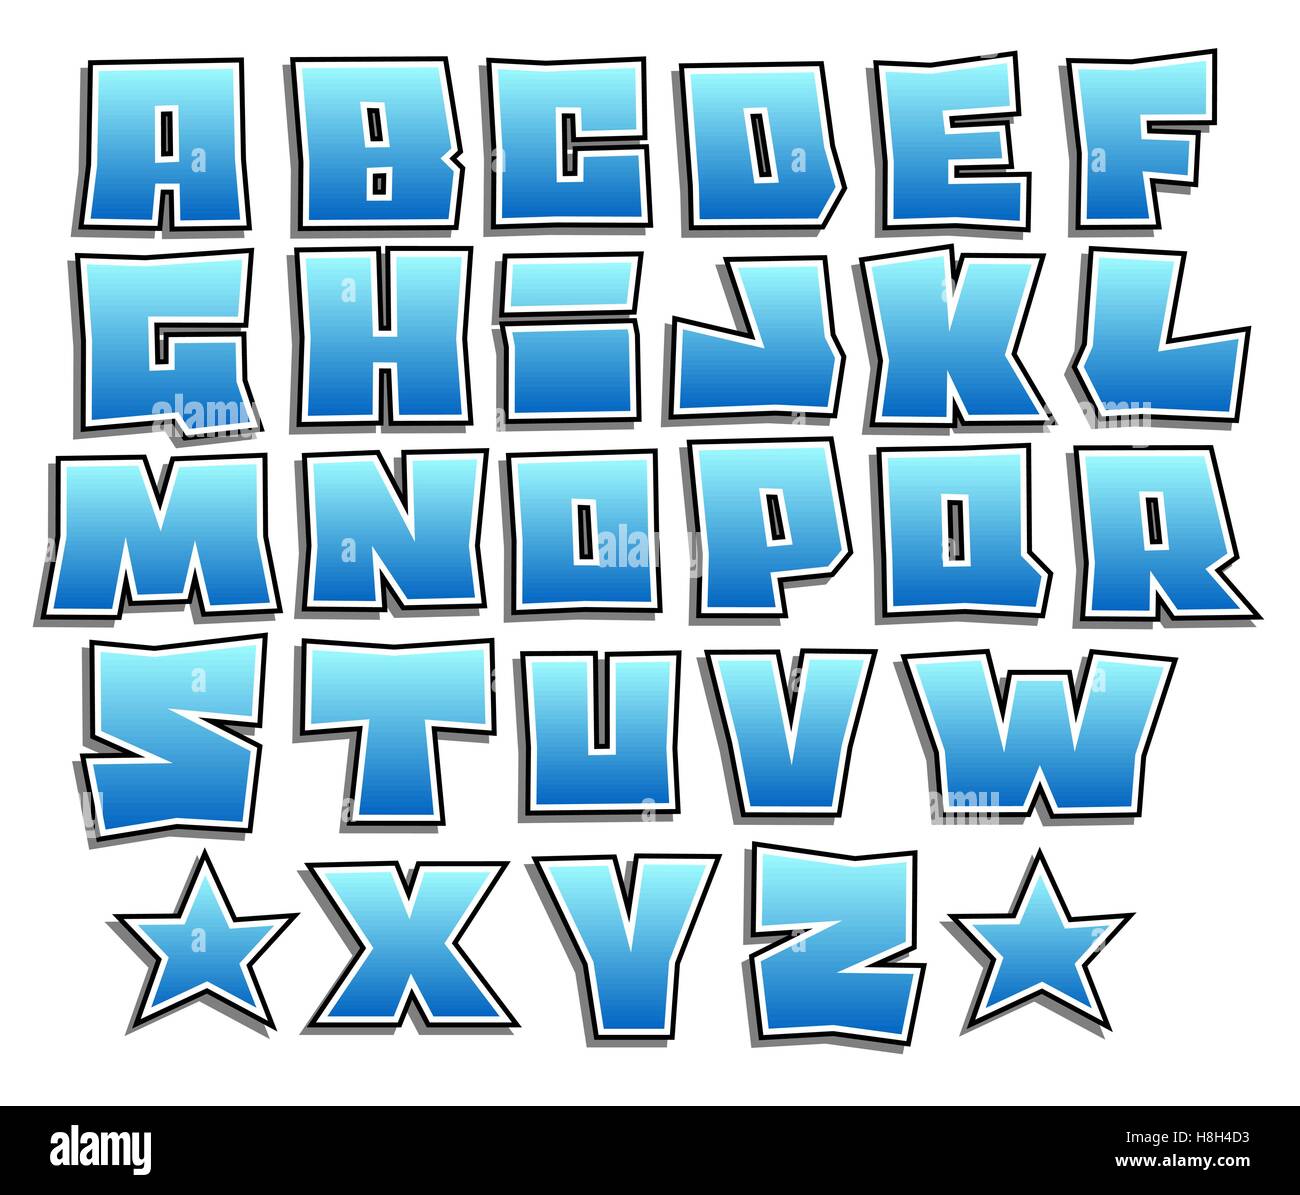 graffiti fonts alphabet letters